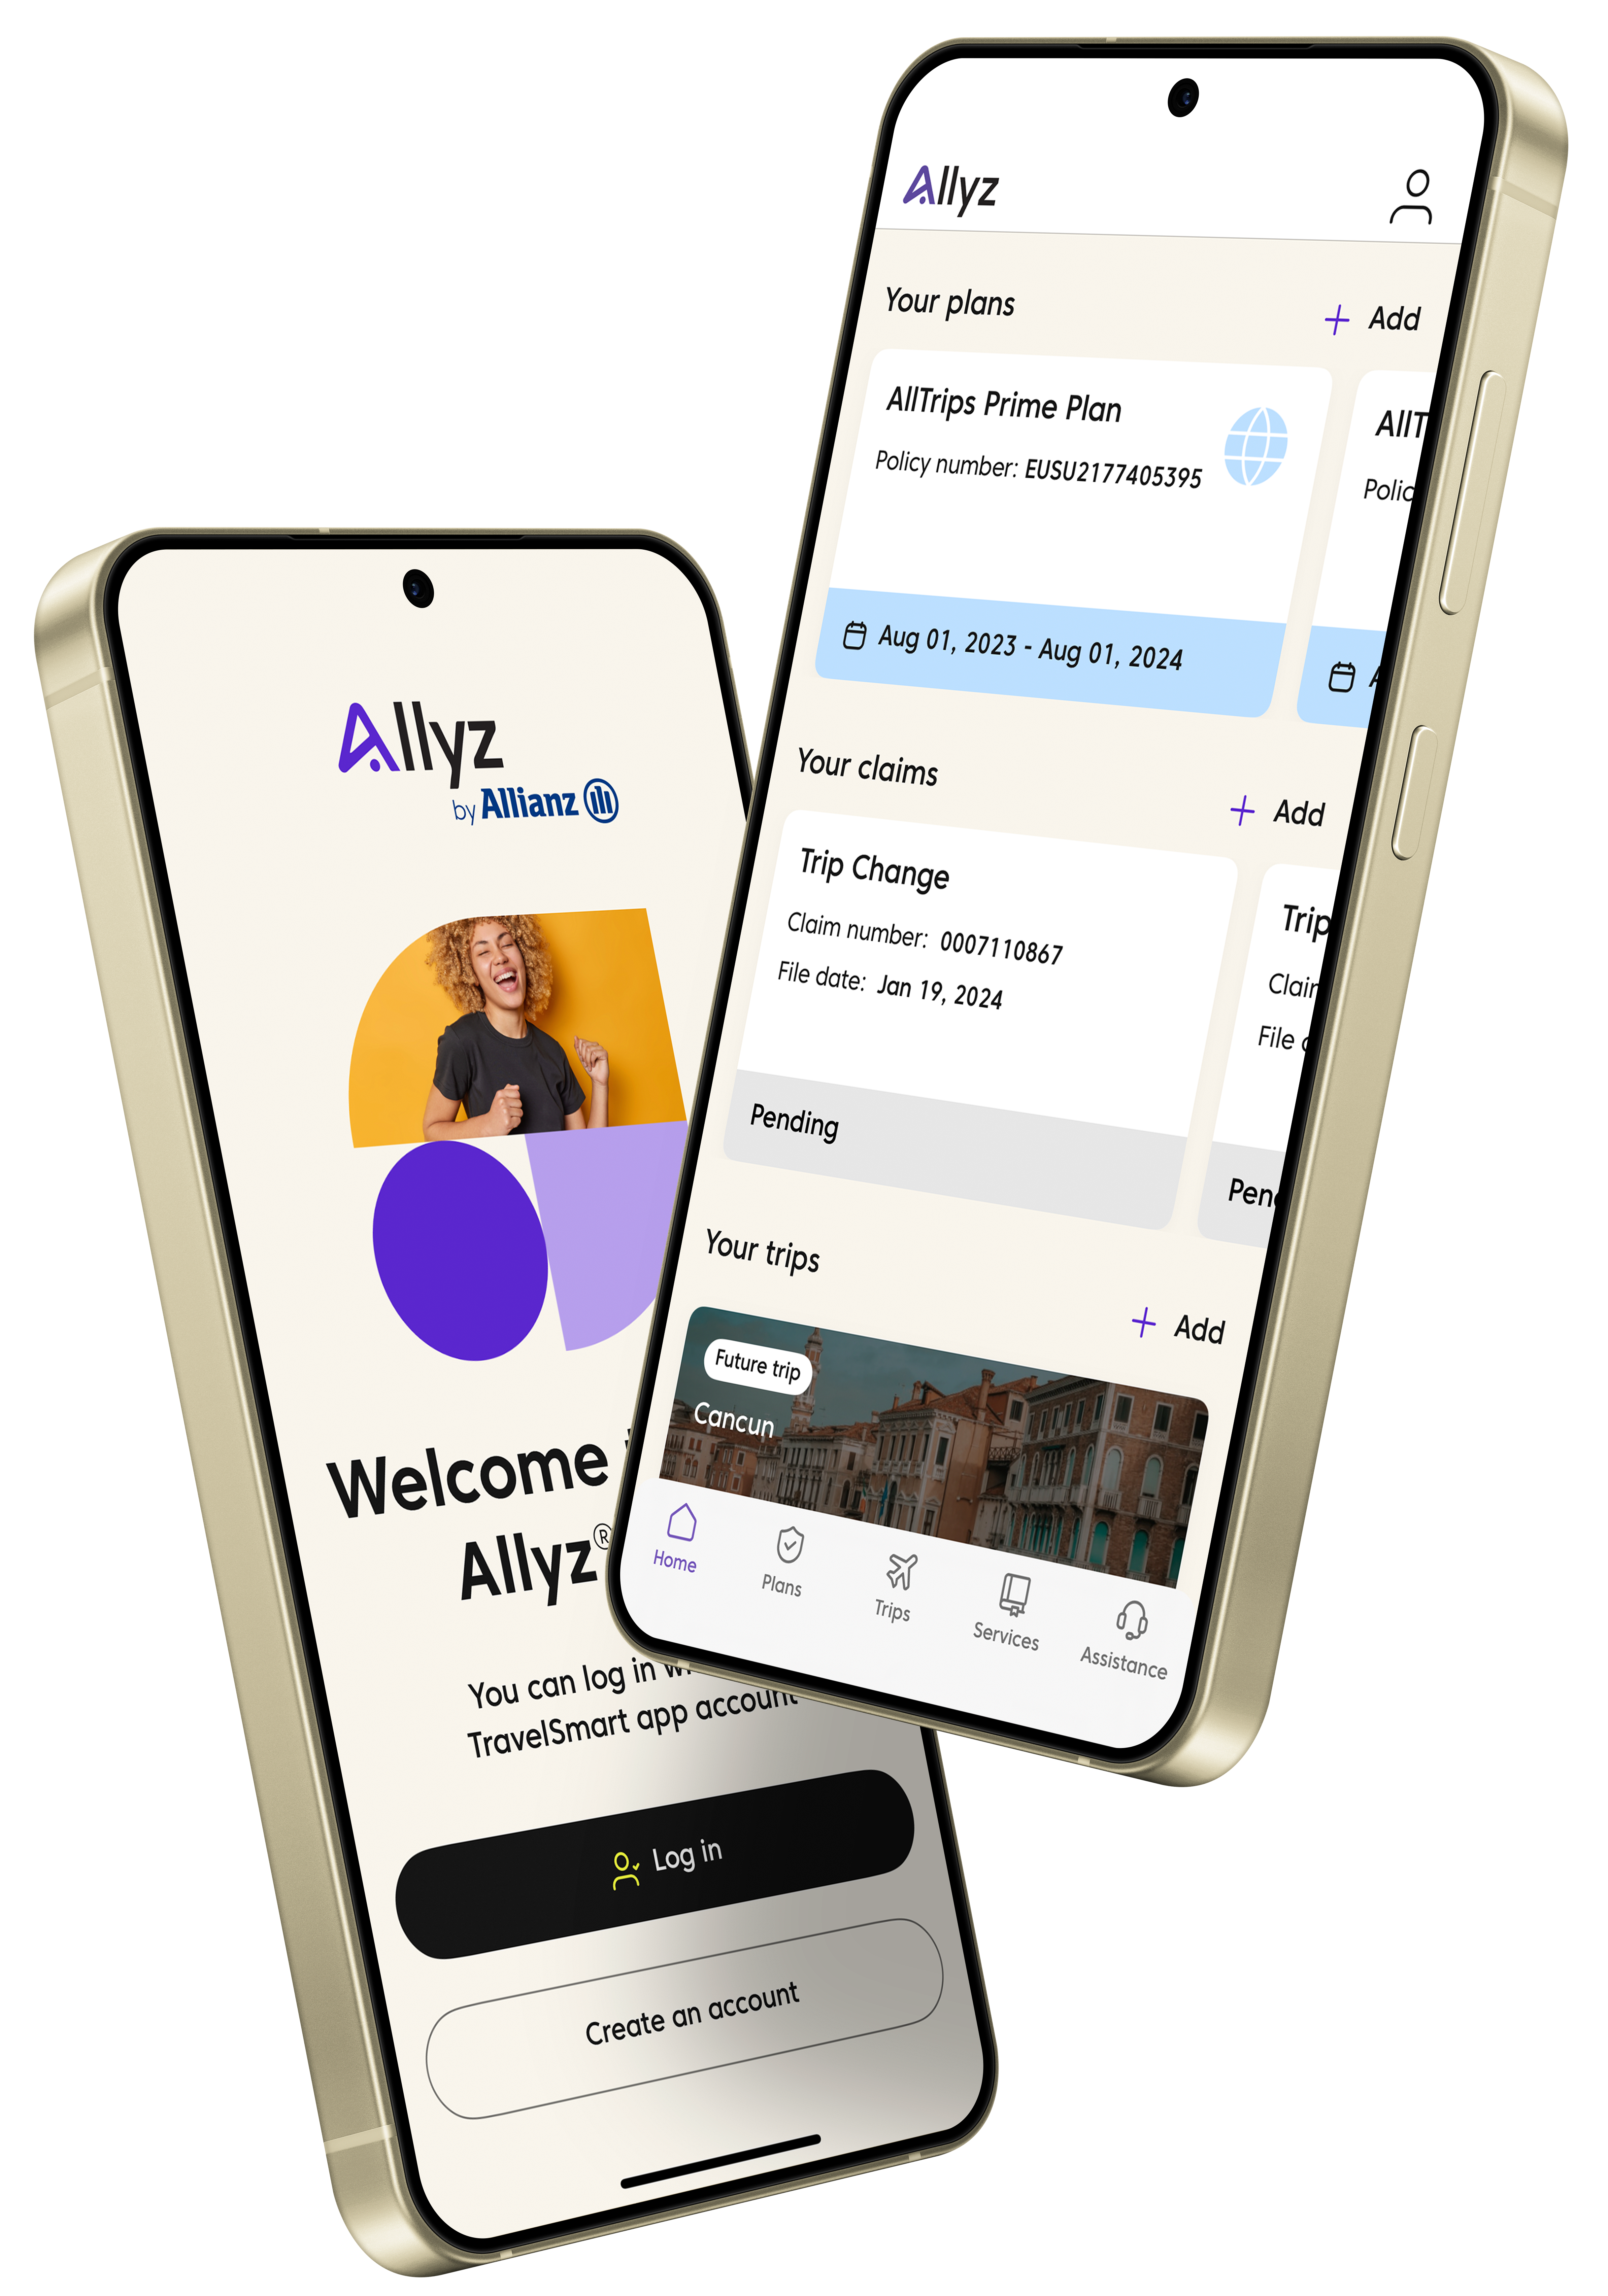 Allianz - Allyz_2_screen_module